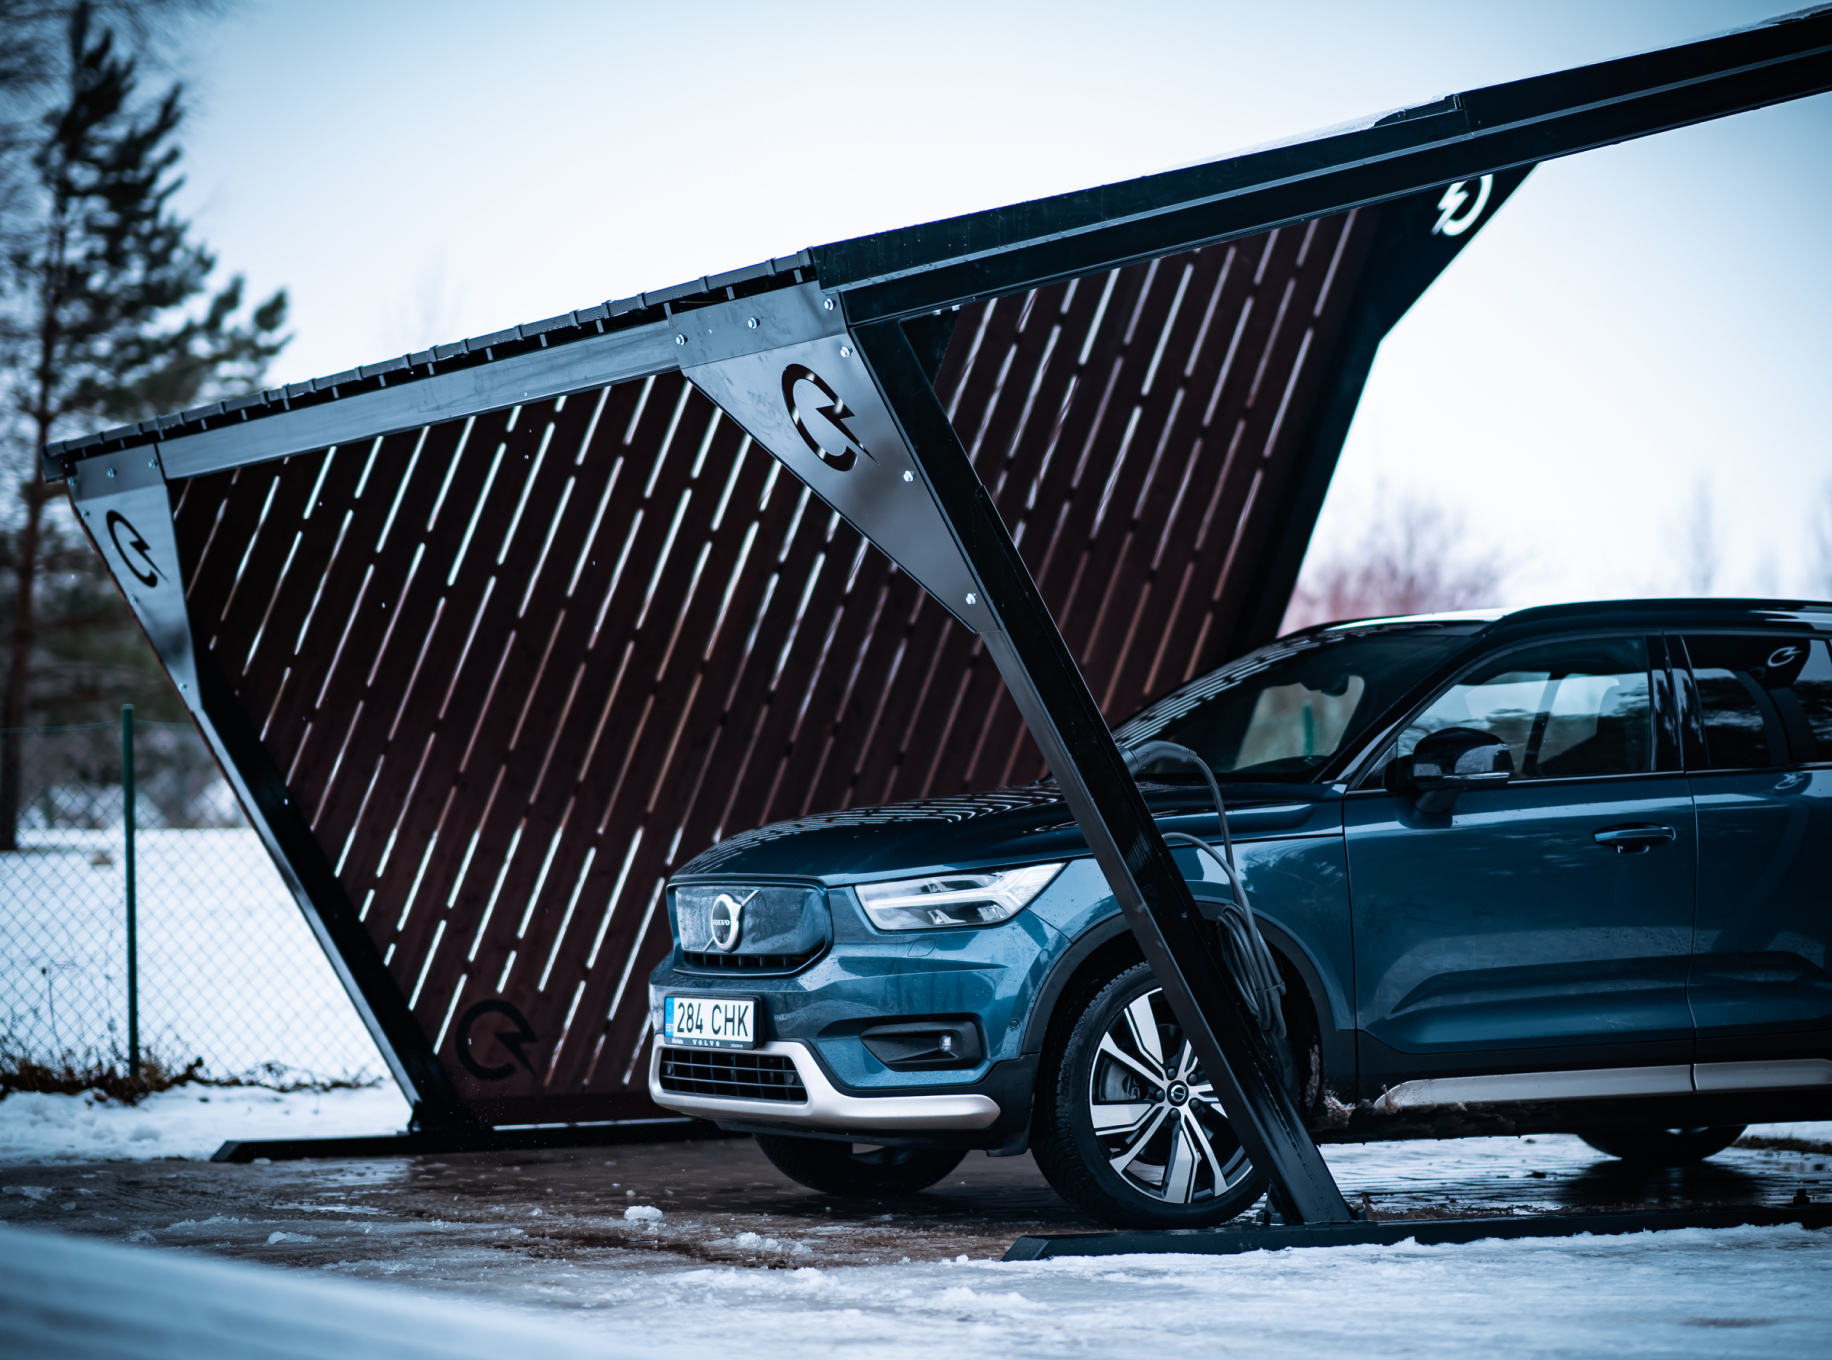 solarstone solar carport with volvo in snowy conditions